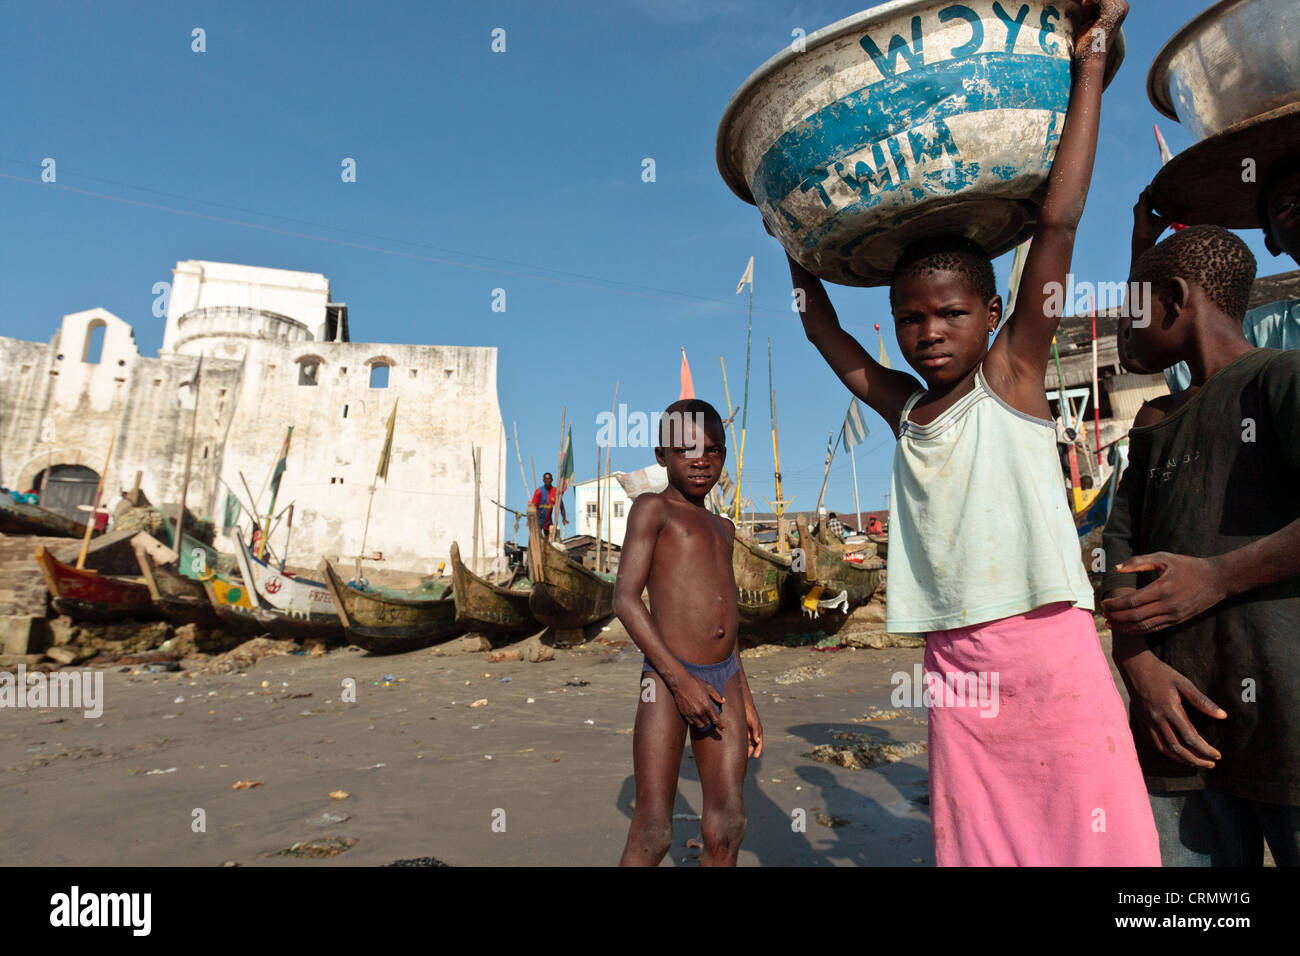 Girl carrying container on her head near Cape Coast castle, Cape Coast, Ghana Stock Photo